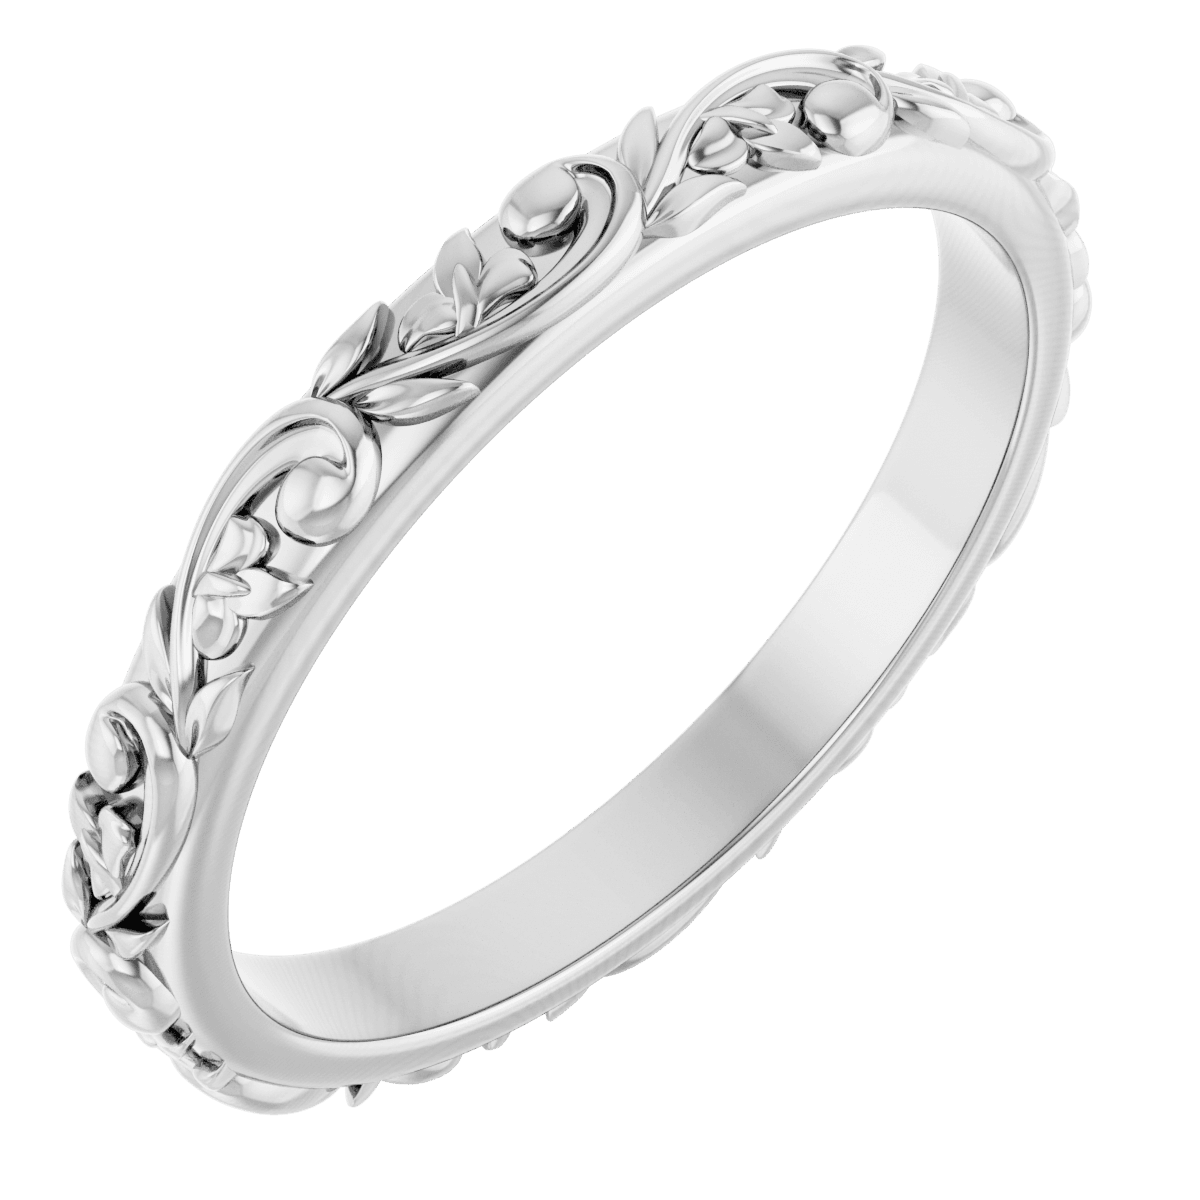 floral wedding ring